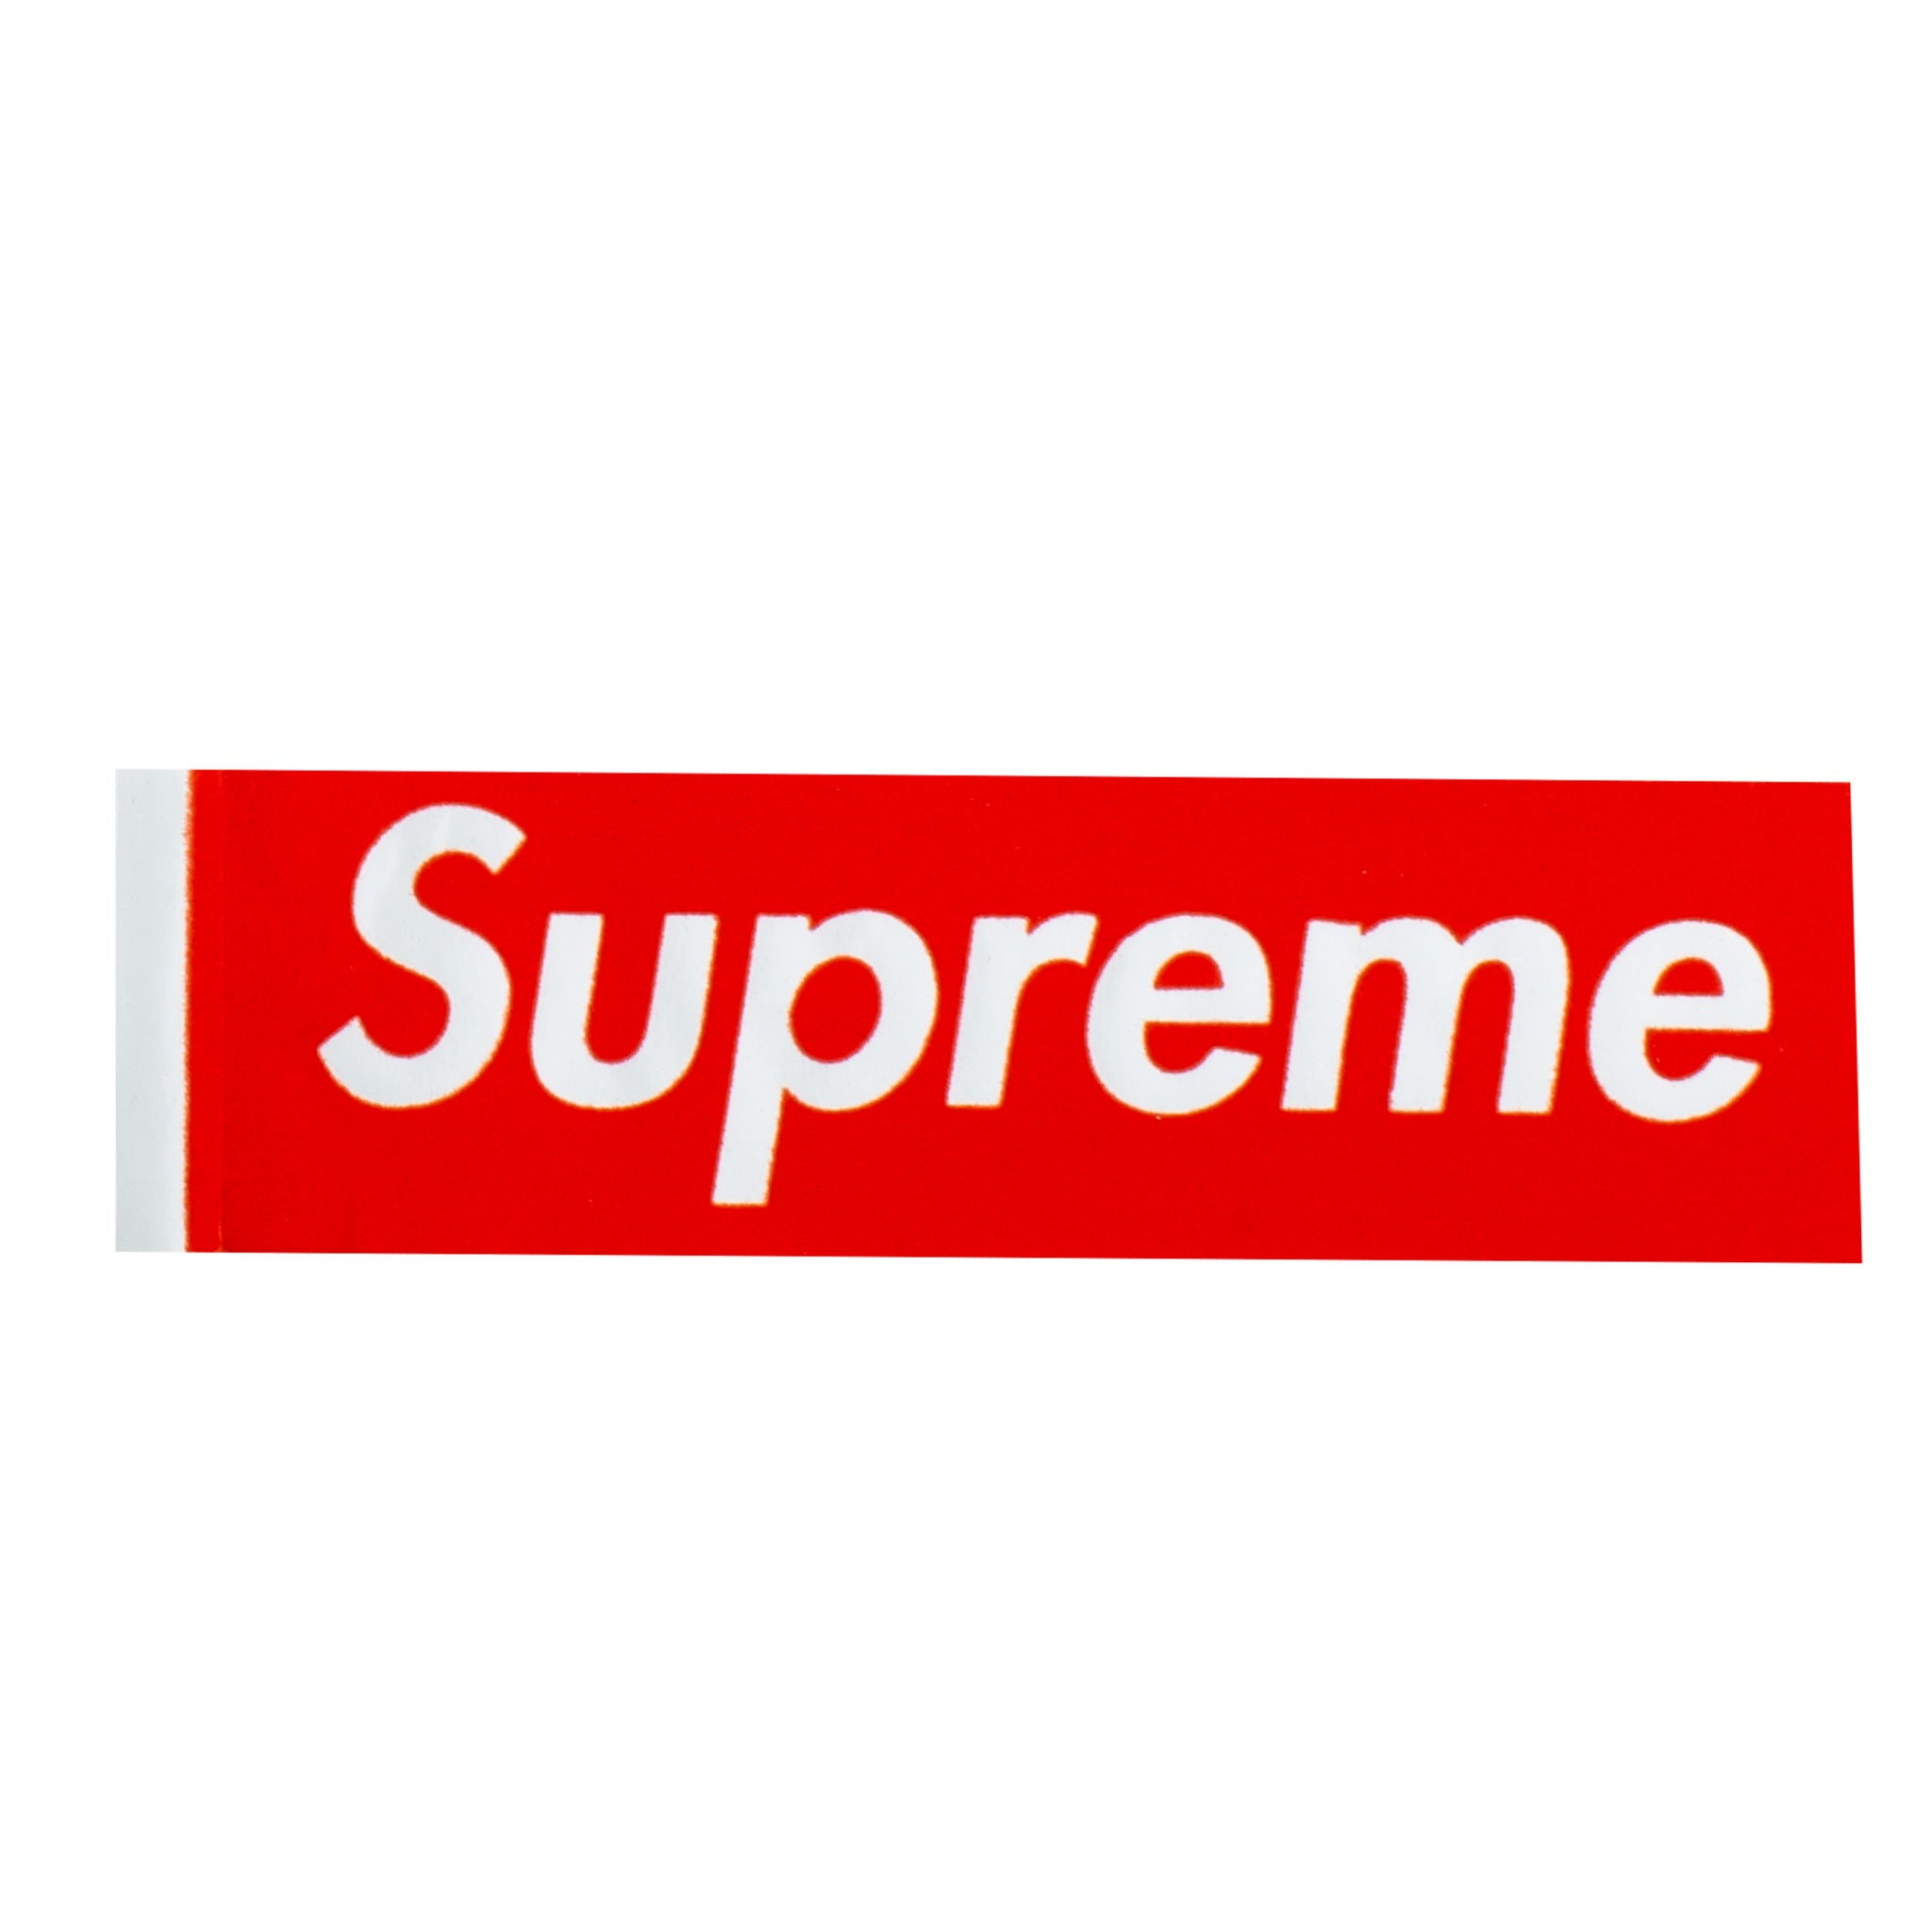 Supreme Red Felt Box Logo Sticker